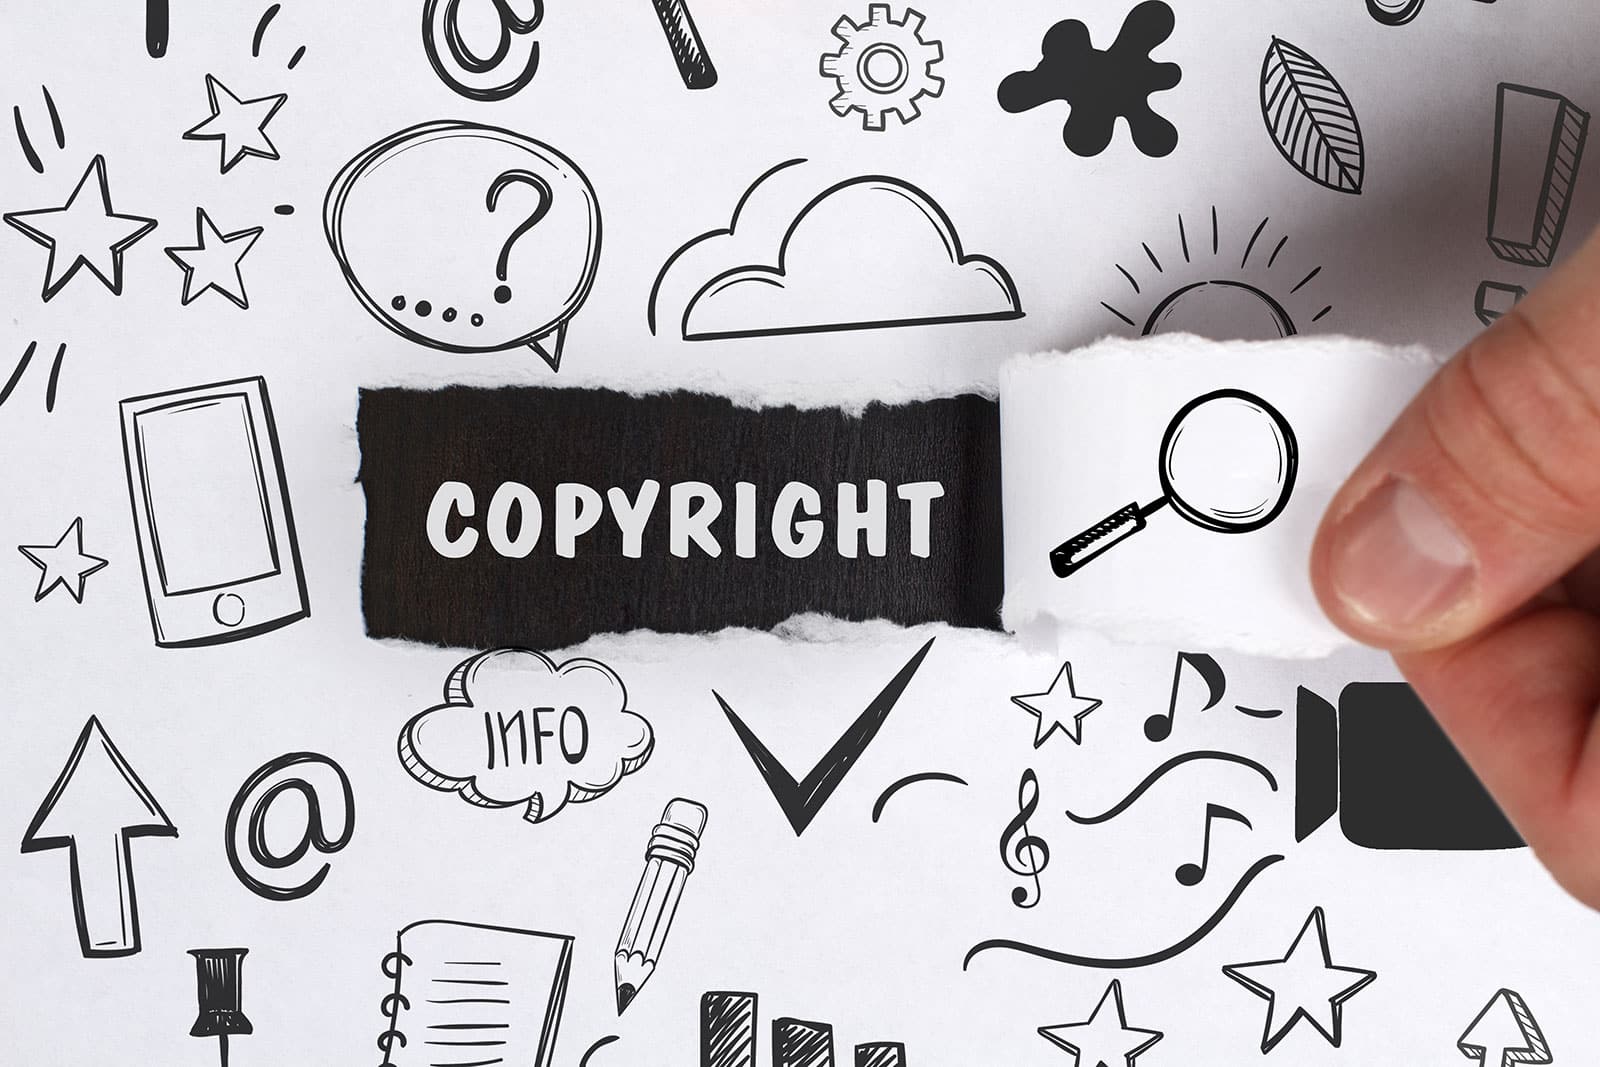 copyright infringement scams